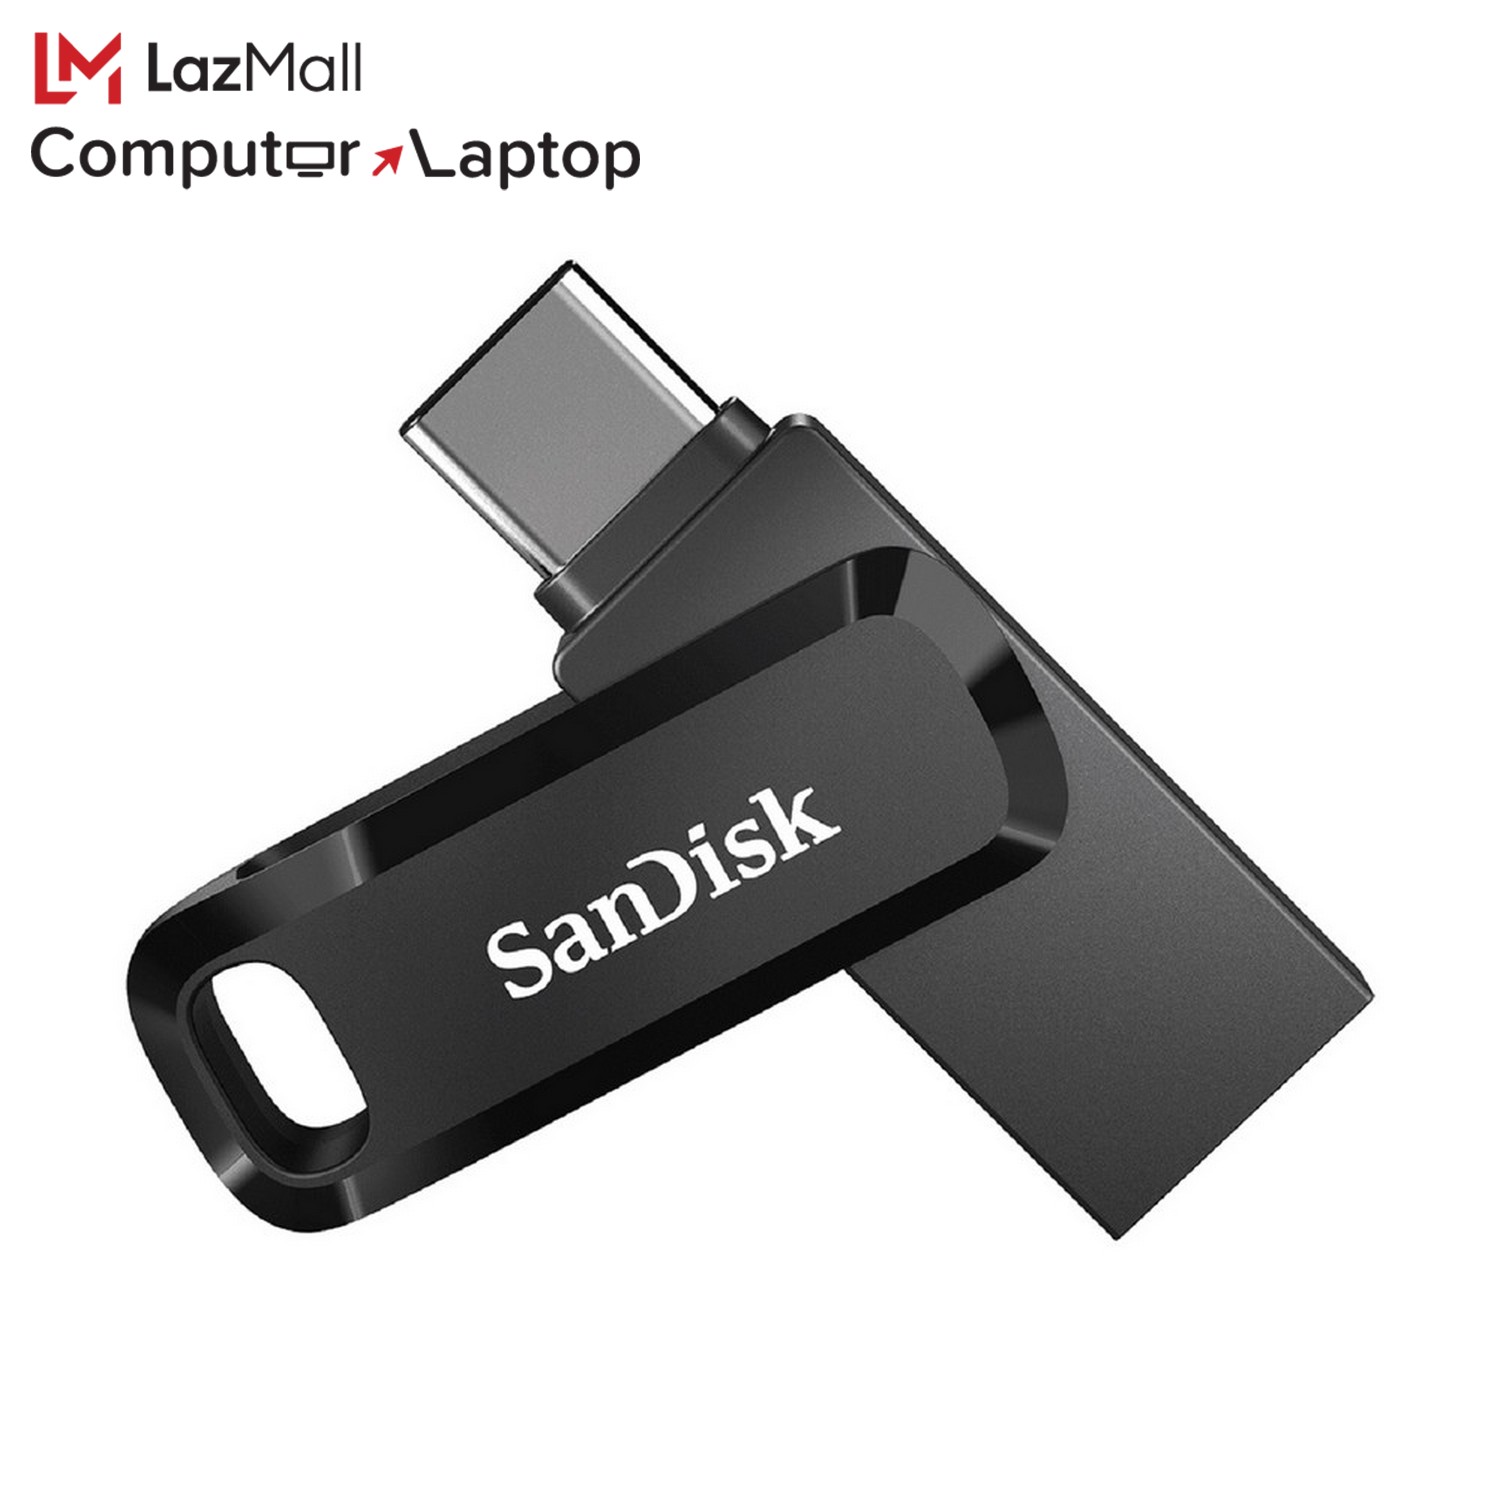 SanDisk Ultra Dual Drive Go USB 3.1 Type - C -64GB (SDDDC3-64GB) ( แฟลชไดร์ฟ Andriod usb Flash Drive )